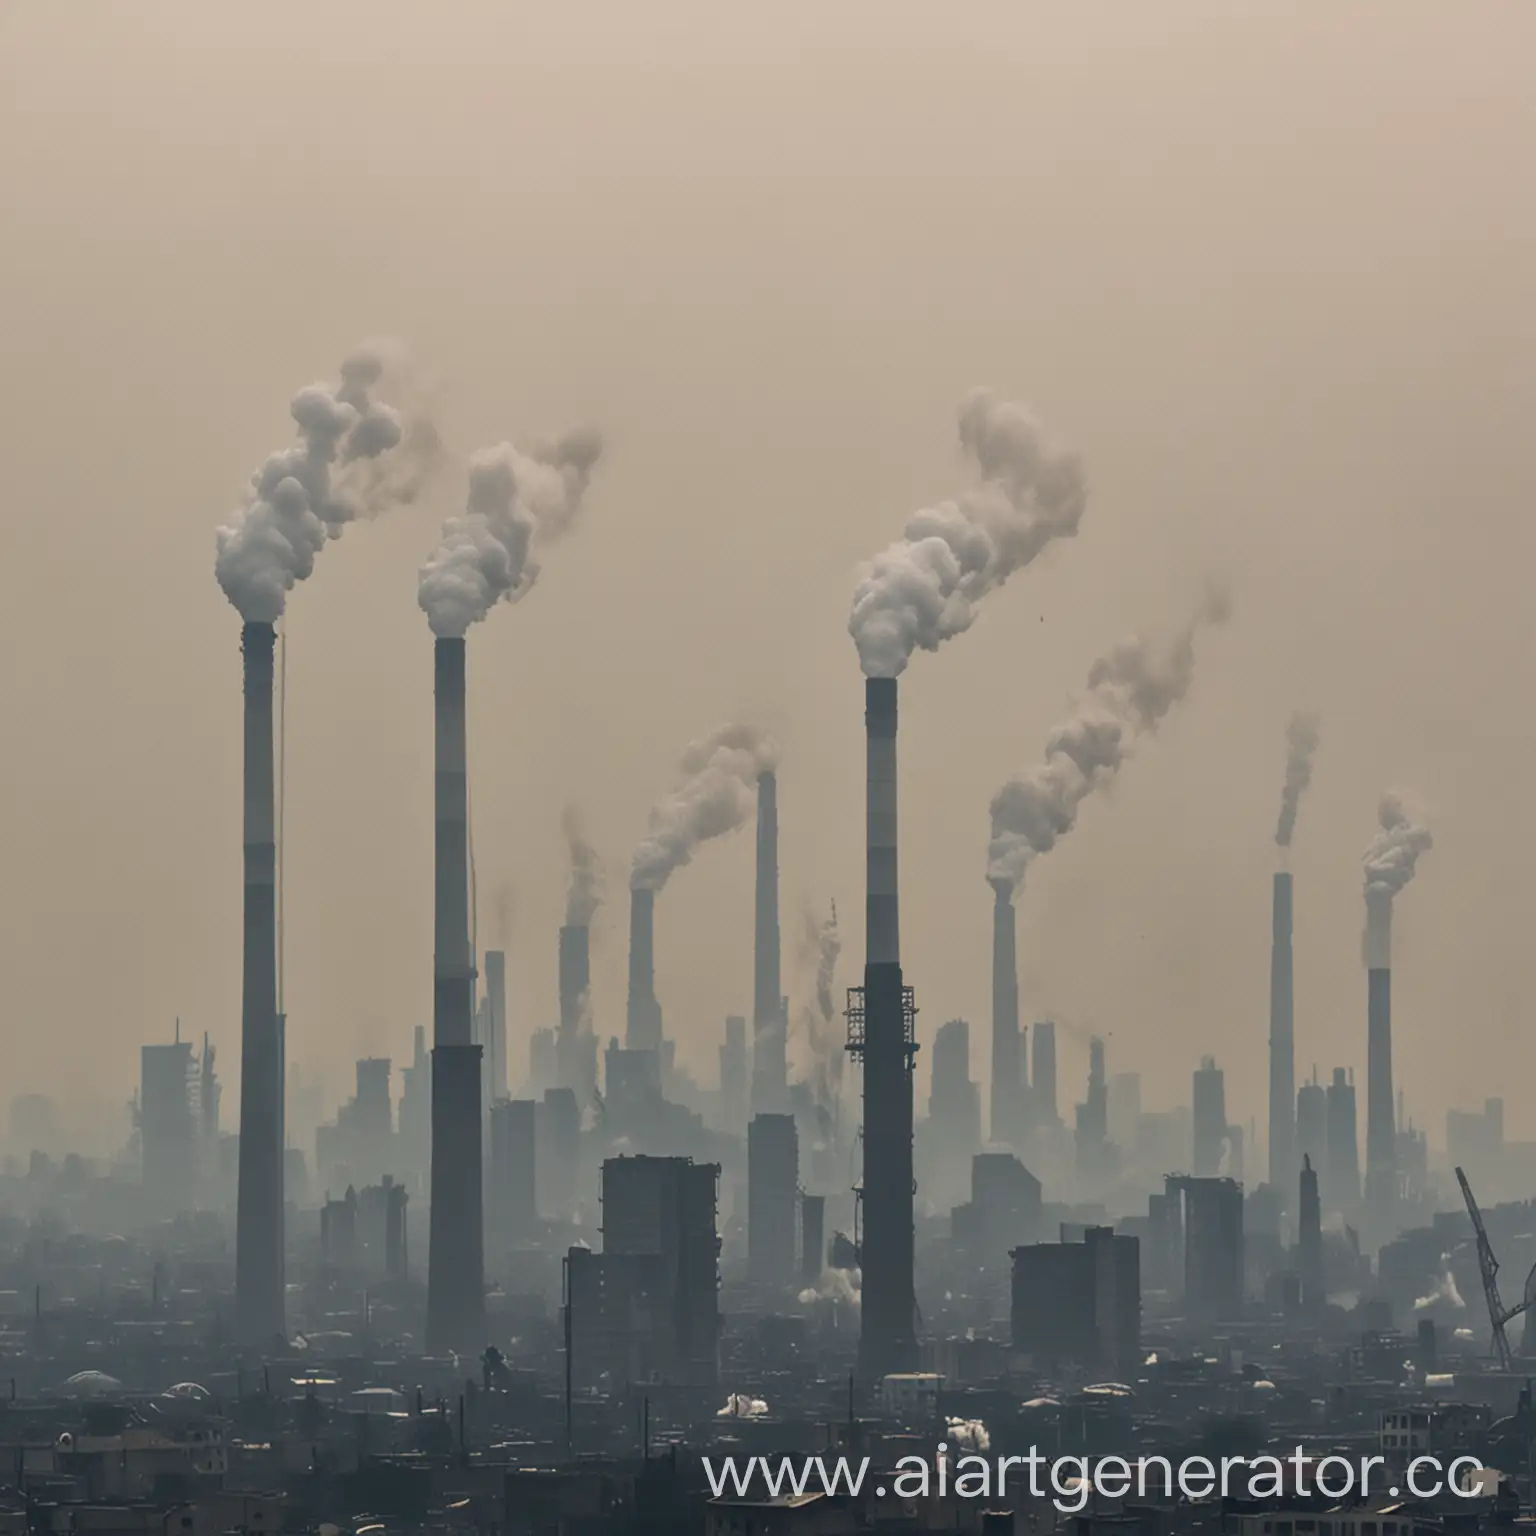 Global-Air-Pollution-Crisis-Humanitys-Shared-Challenge